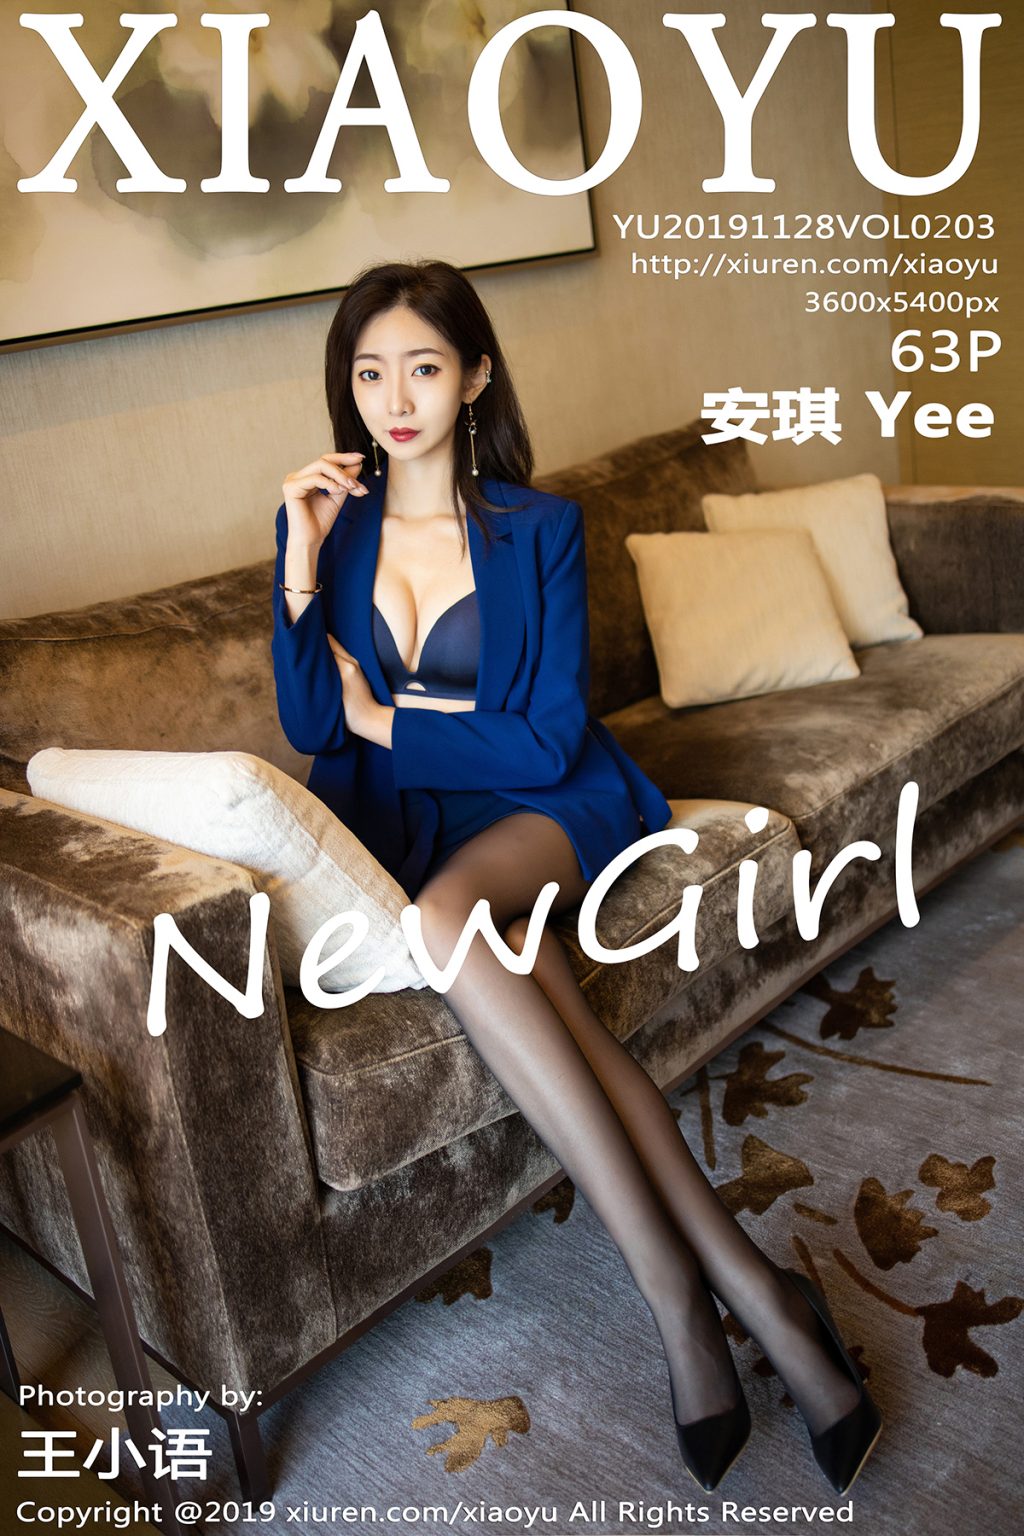 Watch sexy XiaoYu Vol.203: 安琪 Yee photos